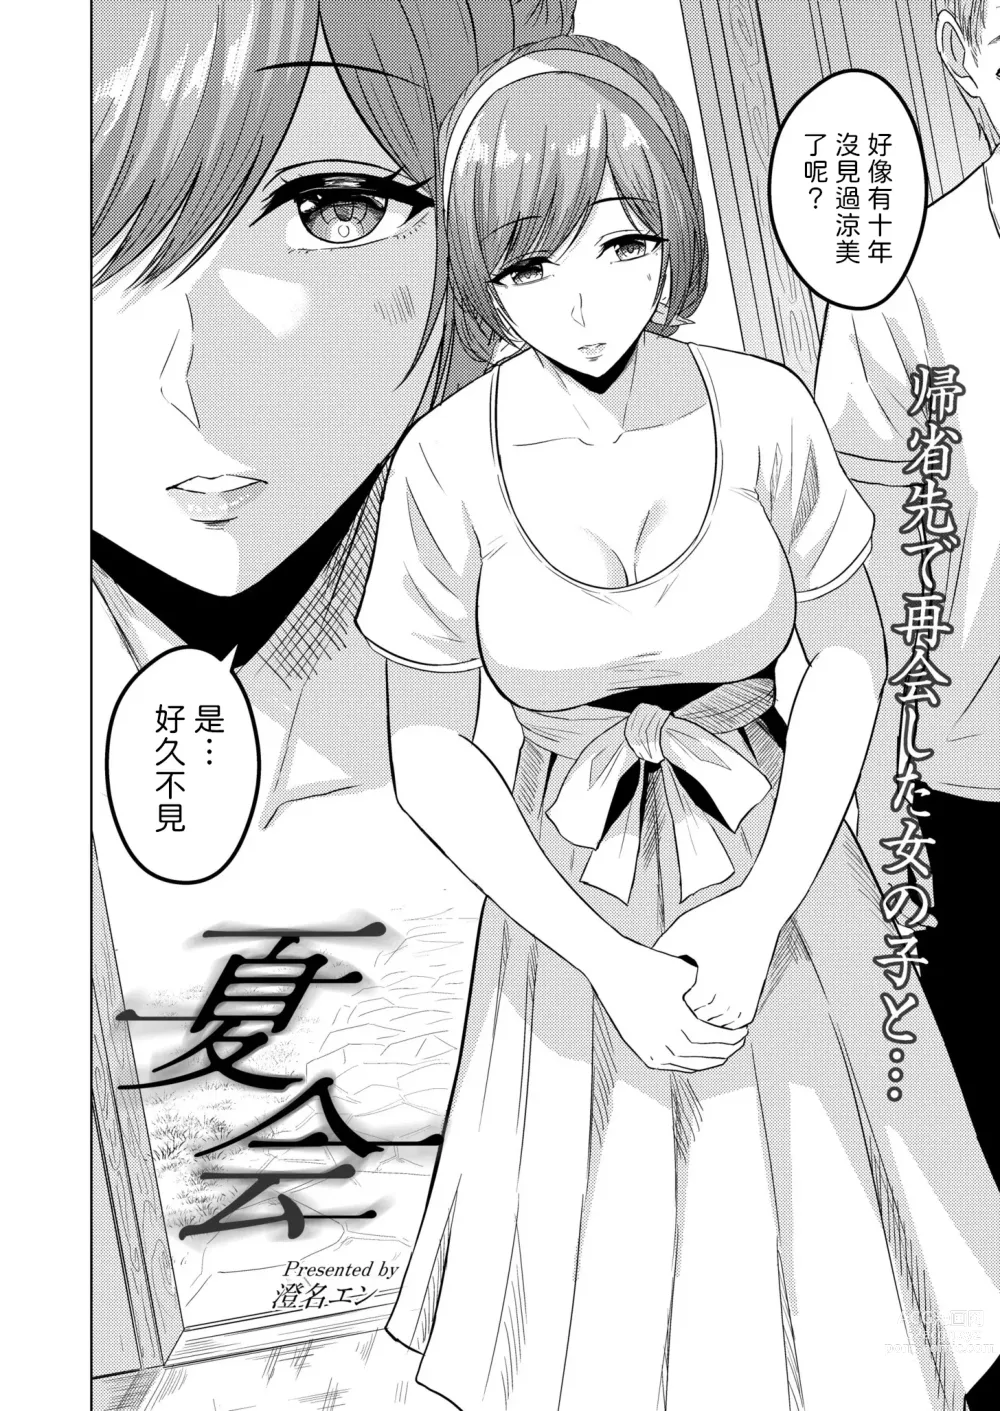 Page 2 of manga Natsue